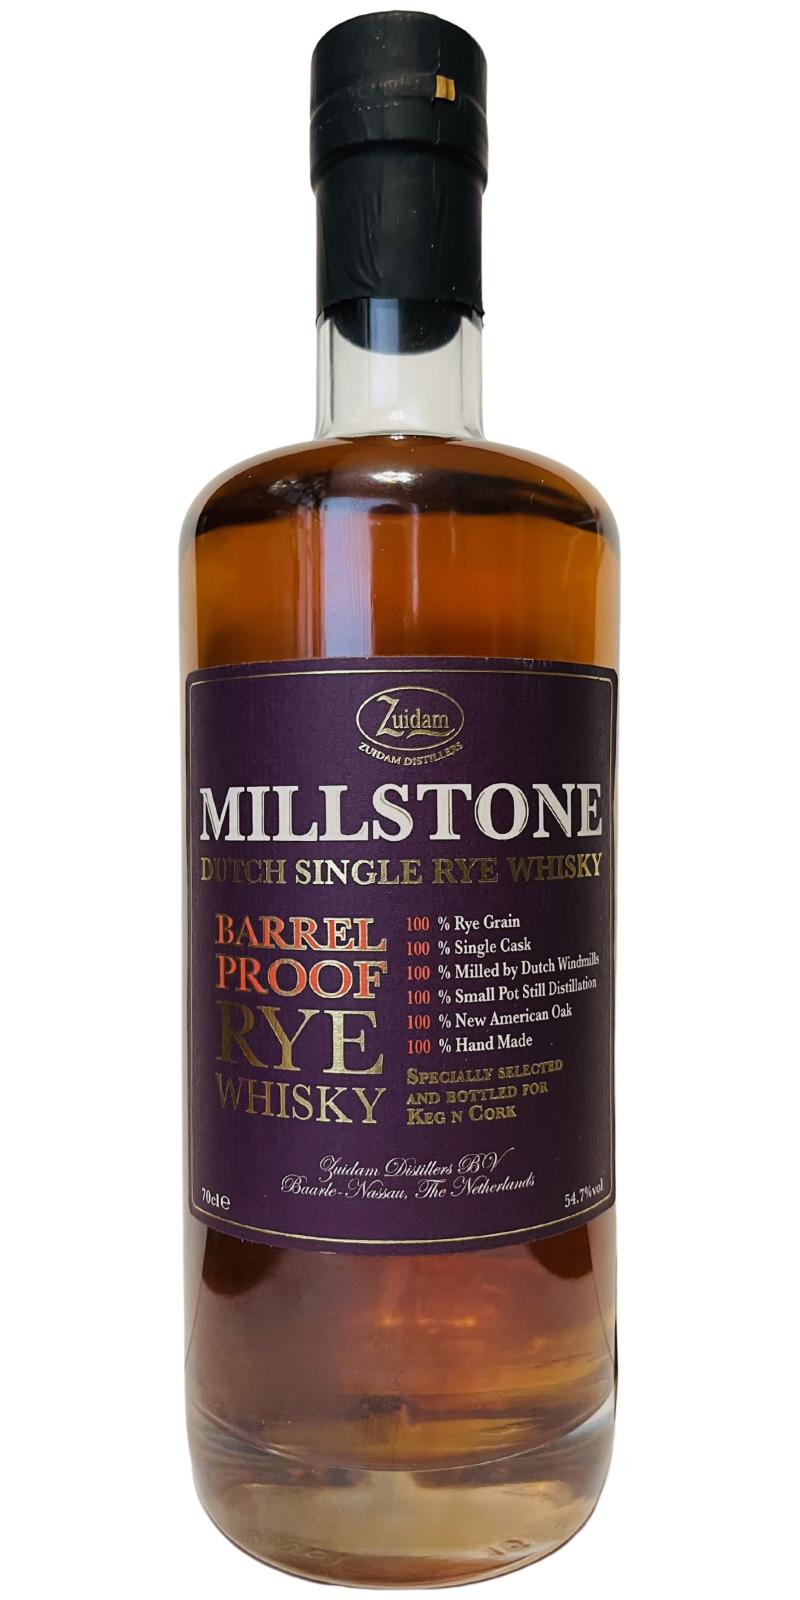 Millstone Rye Whisky Barrel Proof New American Oak Keg n Cork 54.7% 700ml